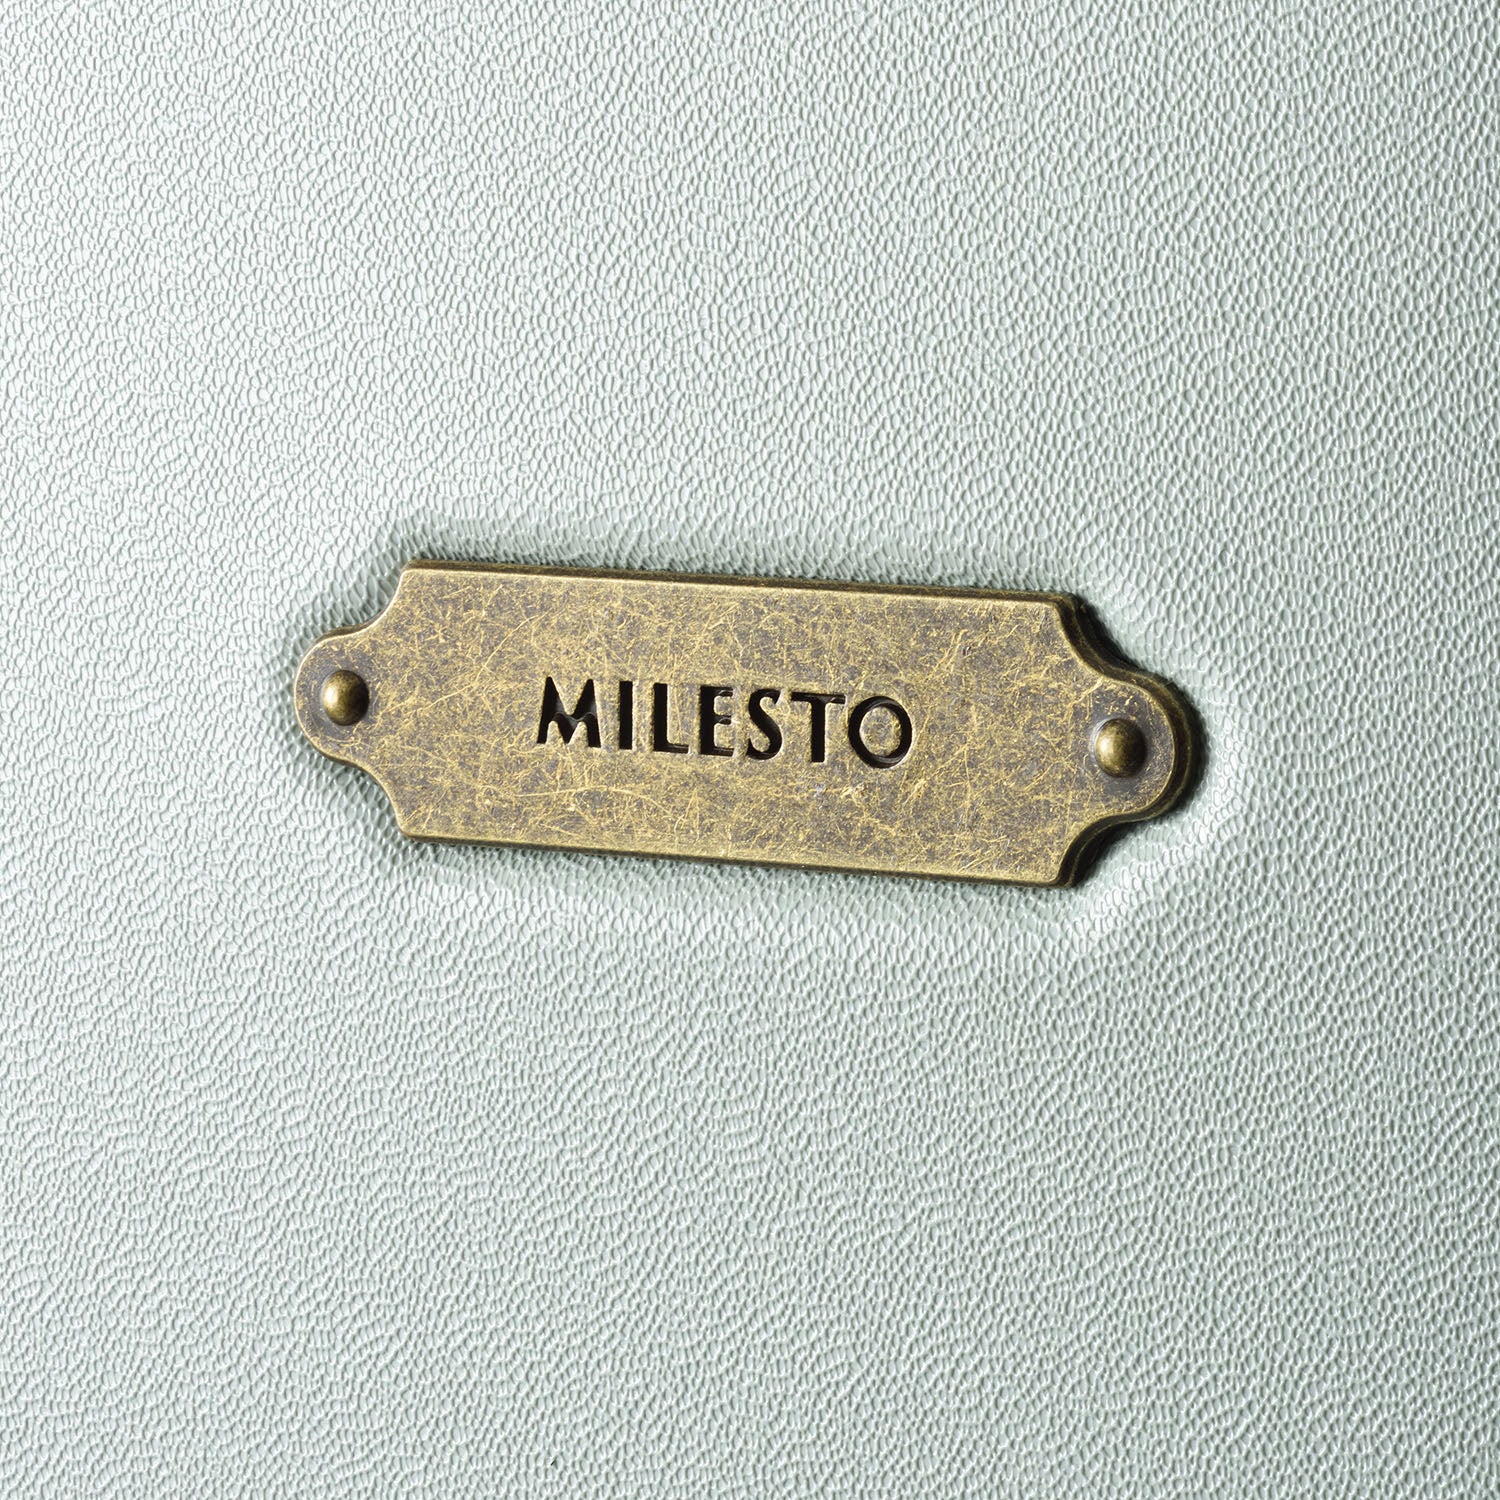 MILESTO UTILITY 經典行李箱 75L - 米白色 MLS657-SBE